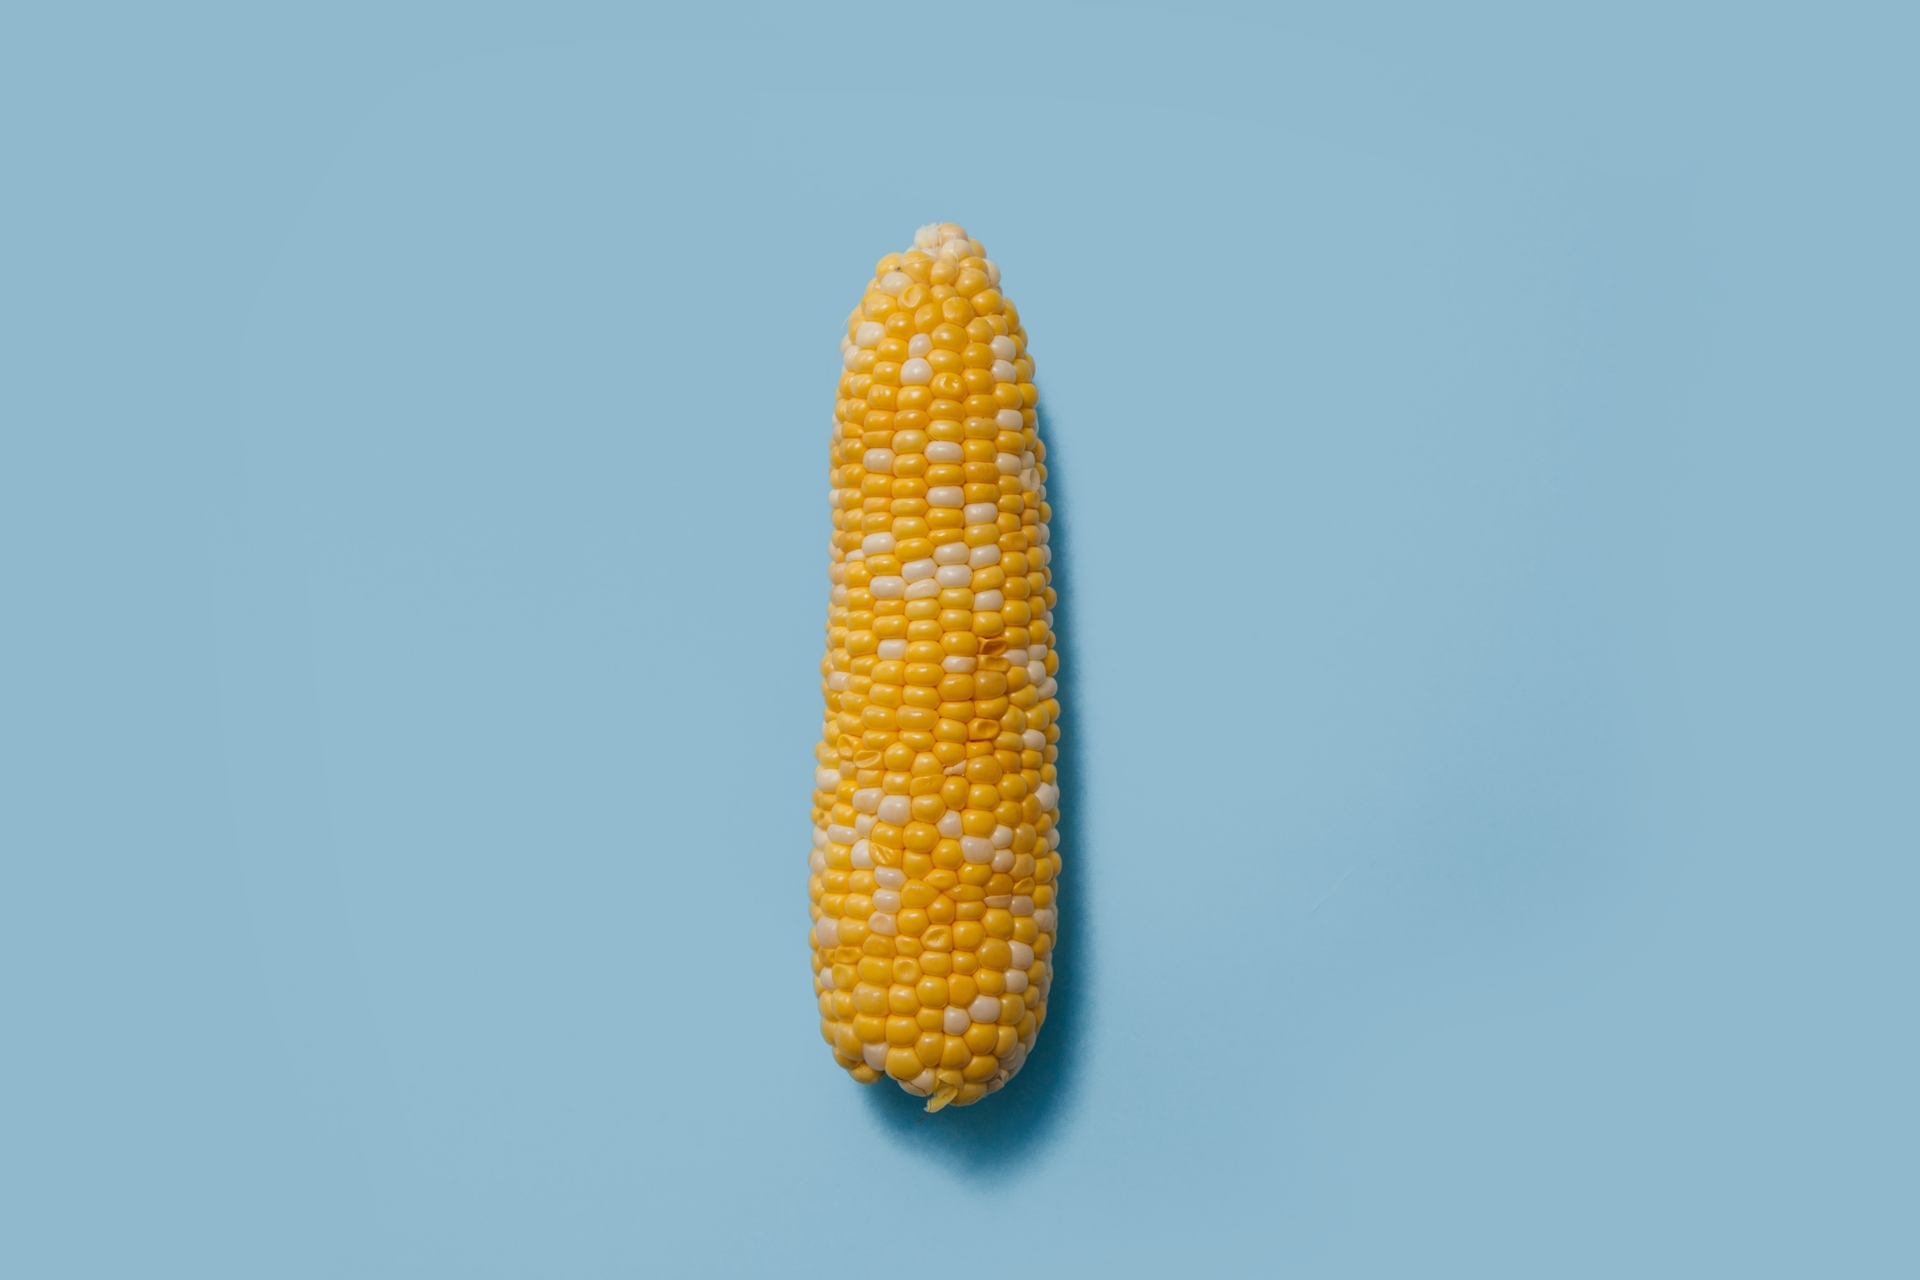 Corn on blue background